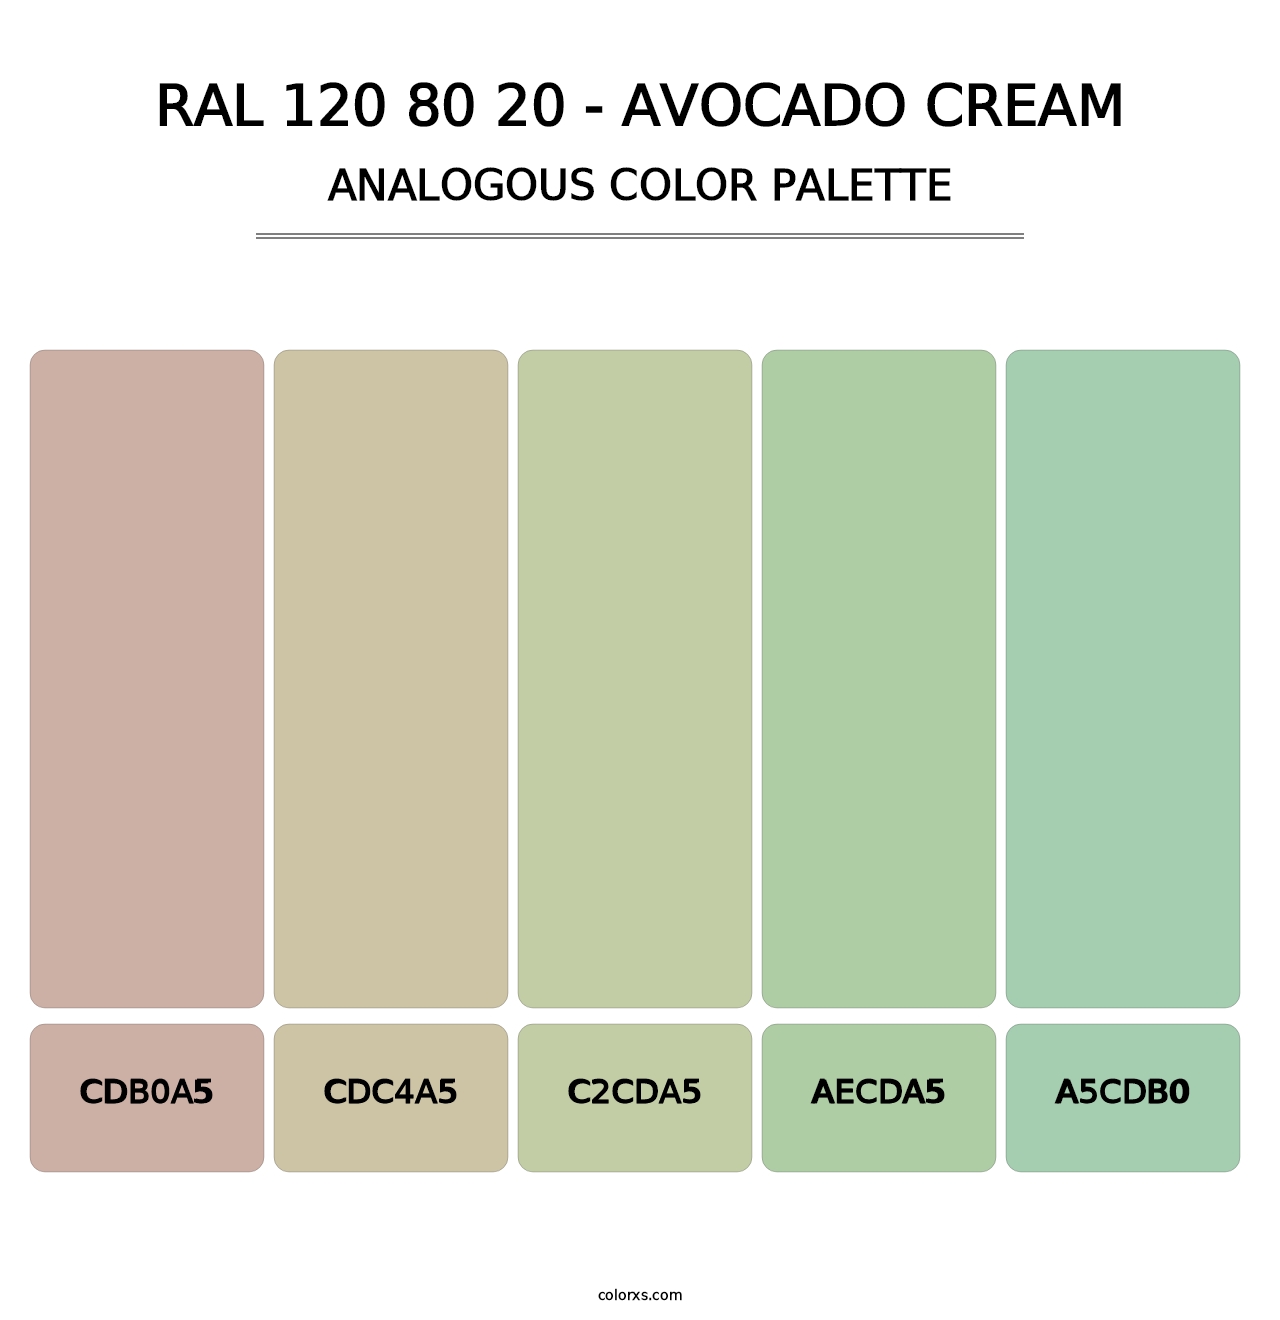 RAL 120 80 20 - Avocado Cream - Analogous Color Palette